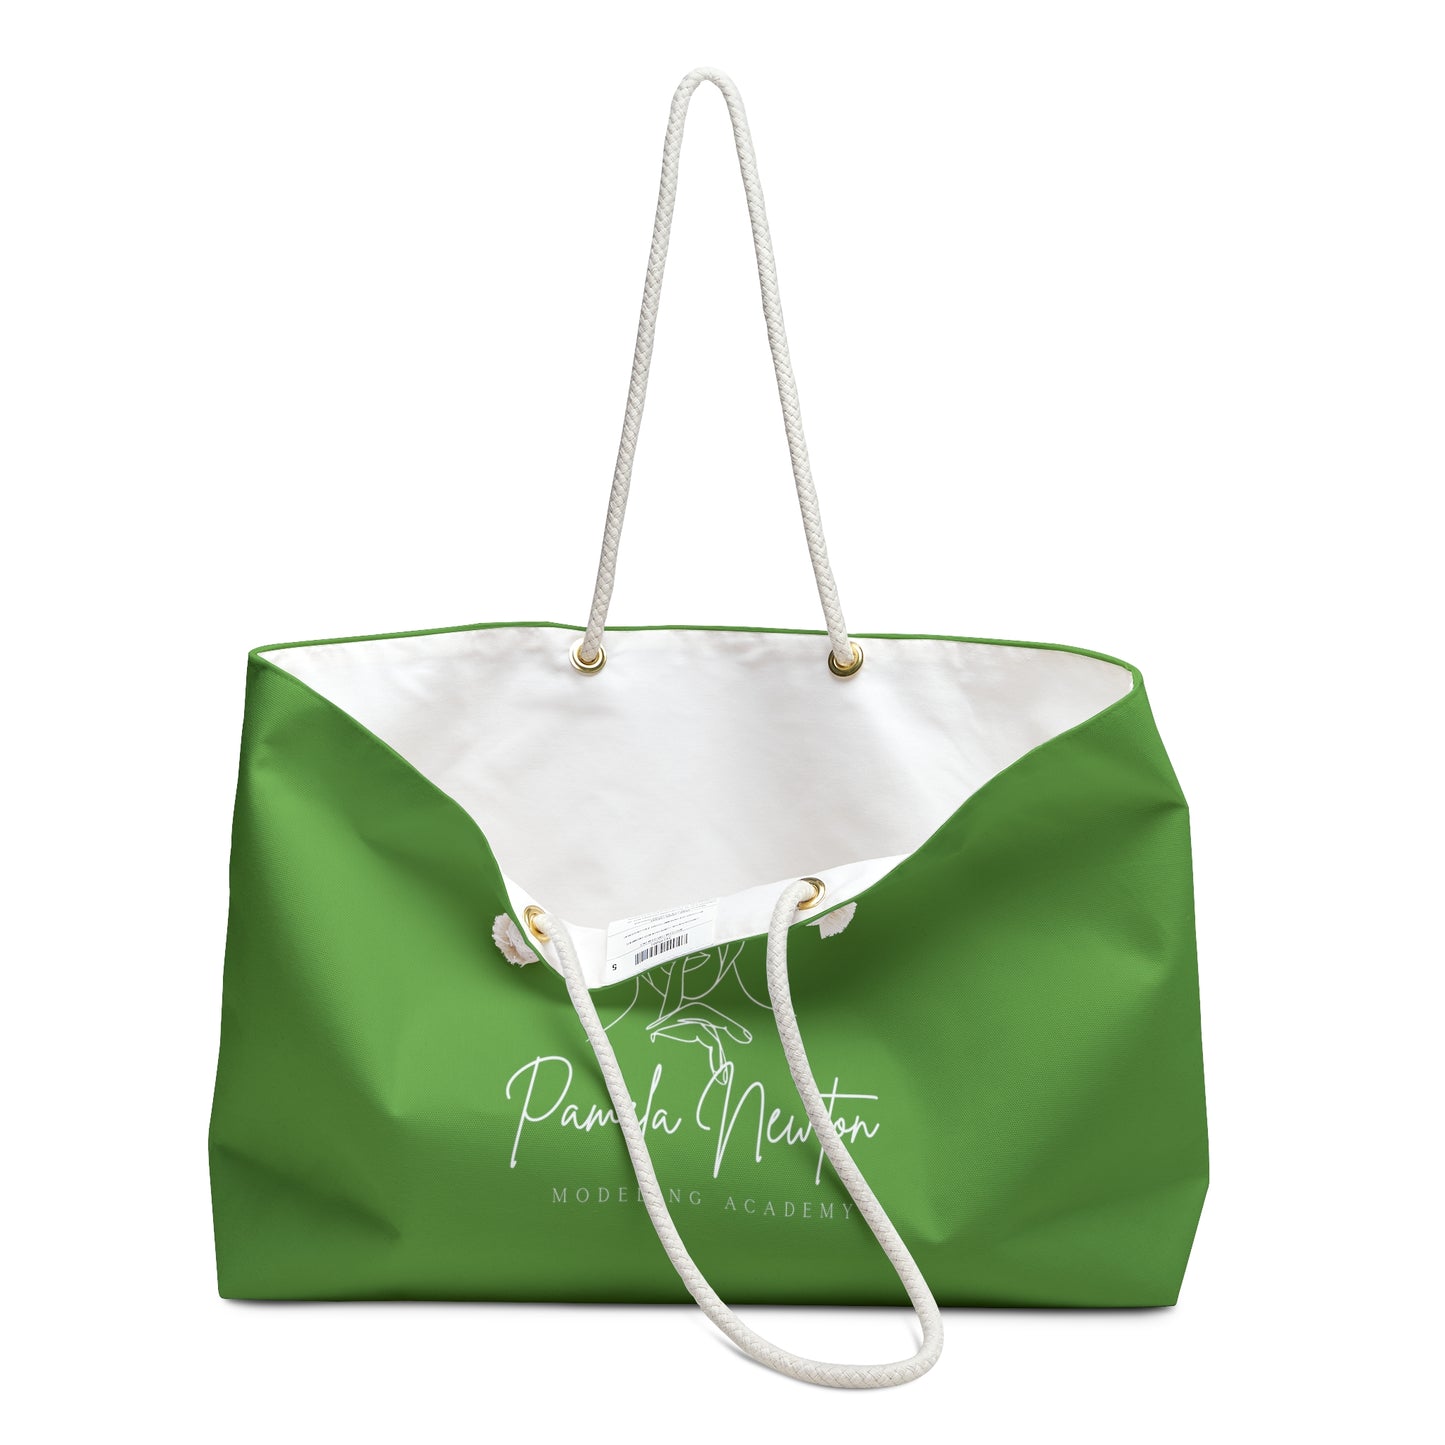 Pamela Newton Modeling Academy Light Green  Weekender Bag